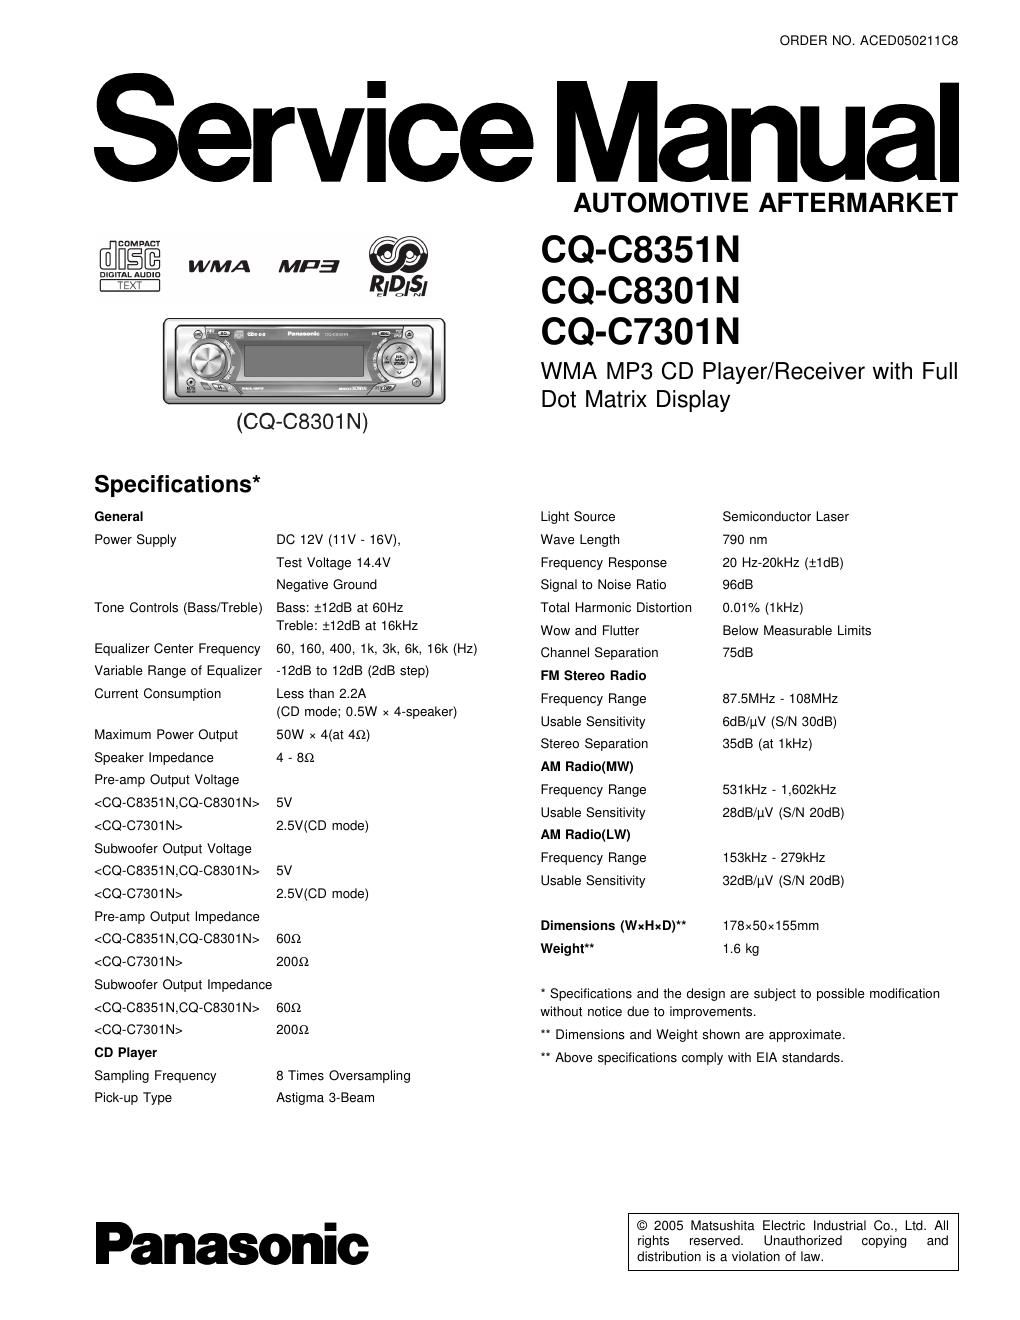 panasonic cq c 7301 n service manual